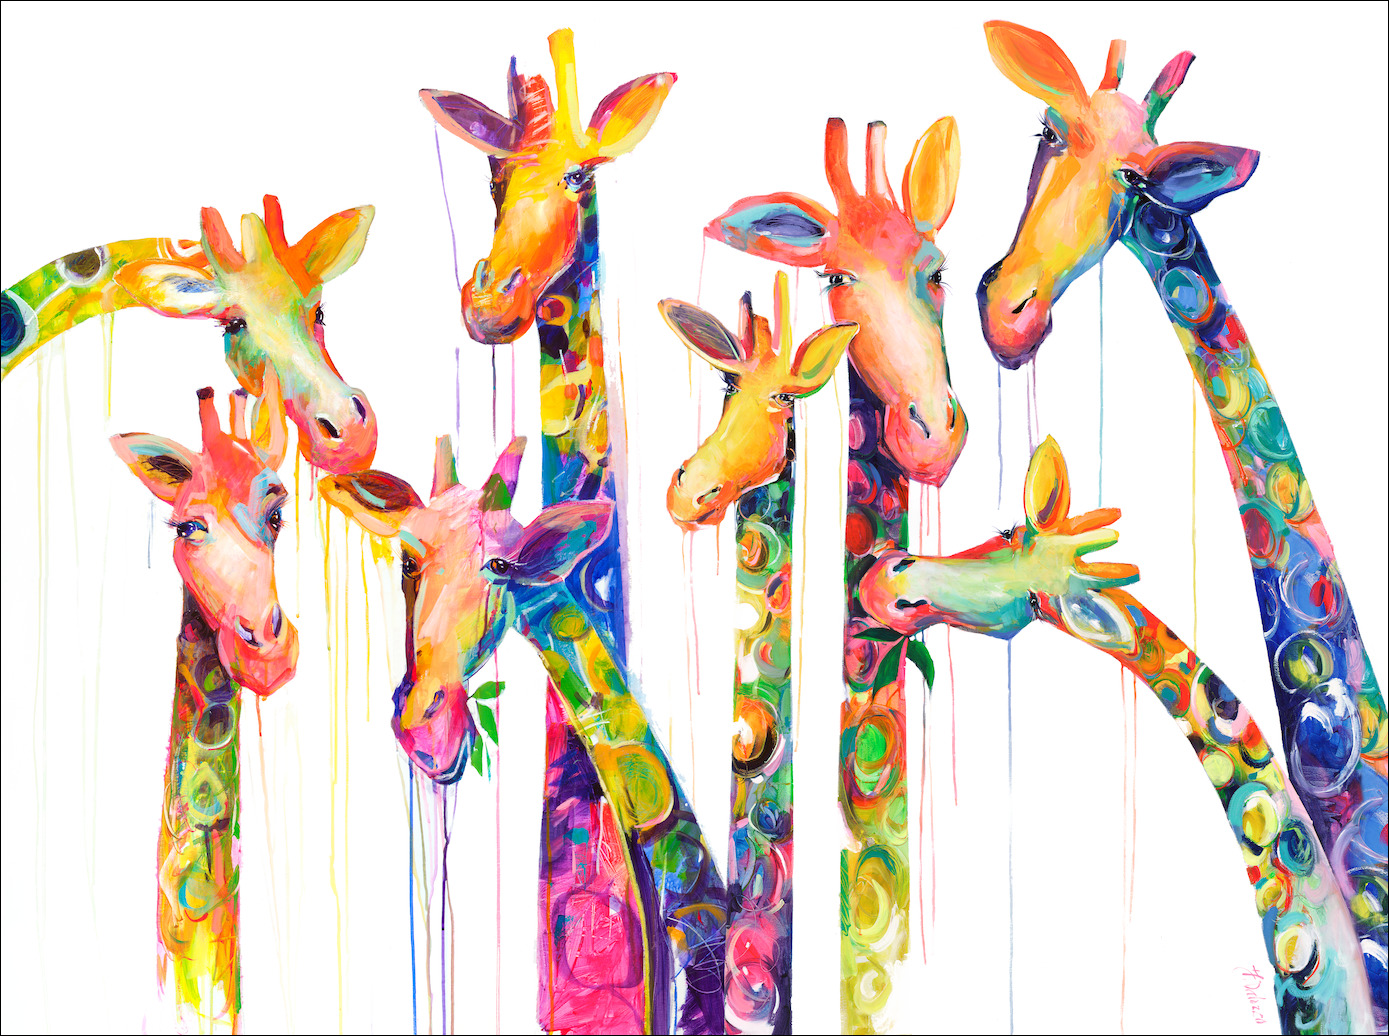 Fluro Animal Animal "Family Gathering" Extended Horizontal Variant From Judith Dalozzo Artwork